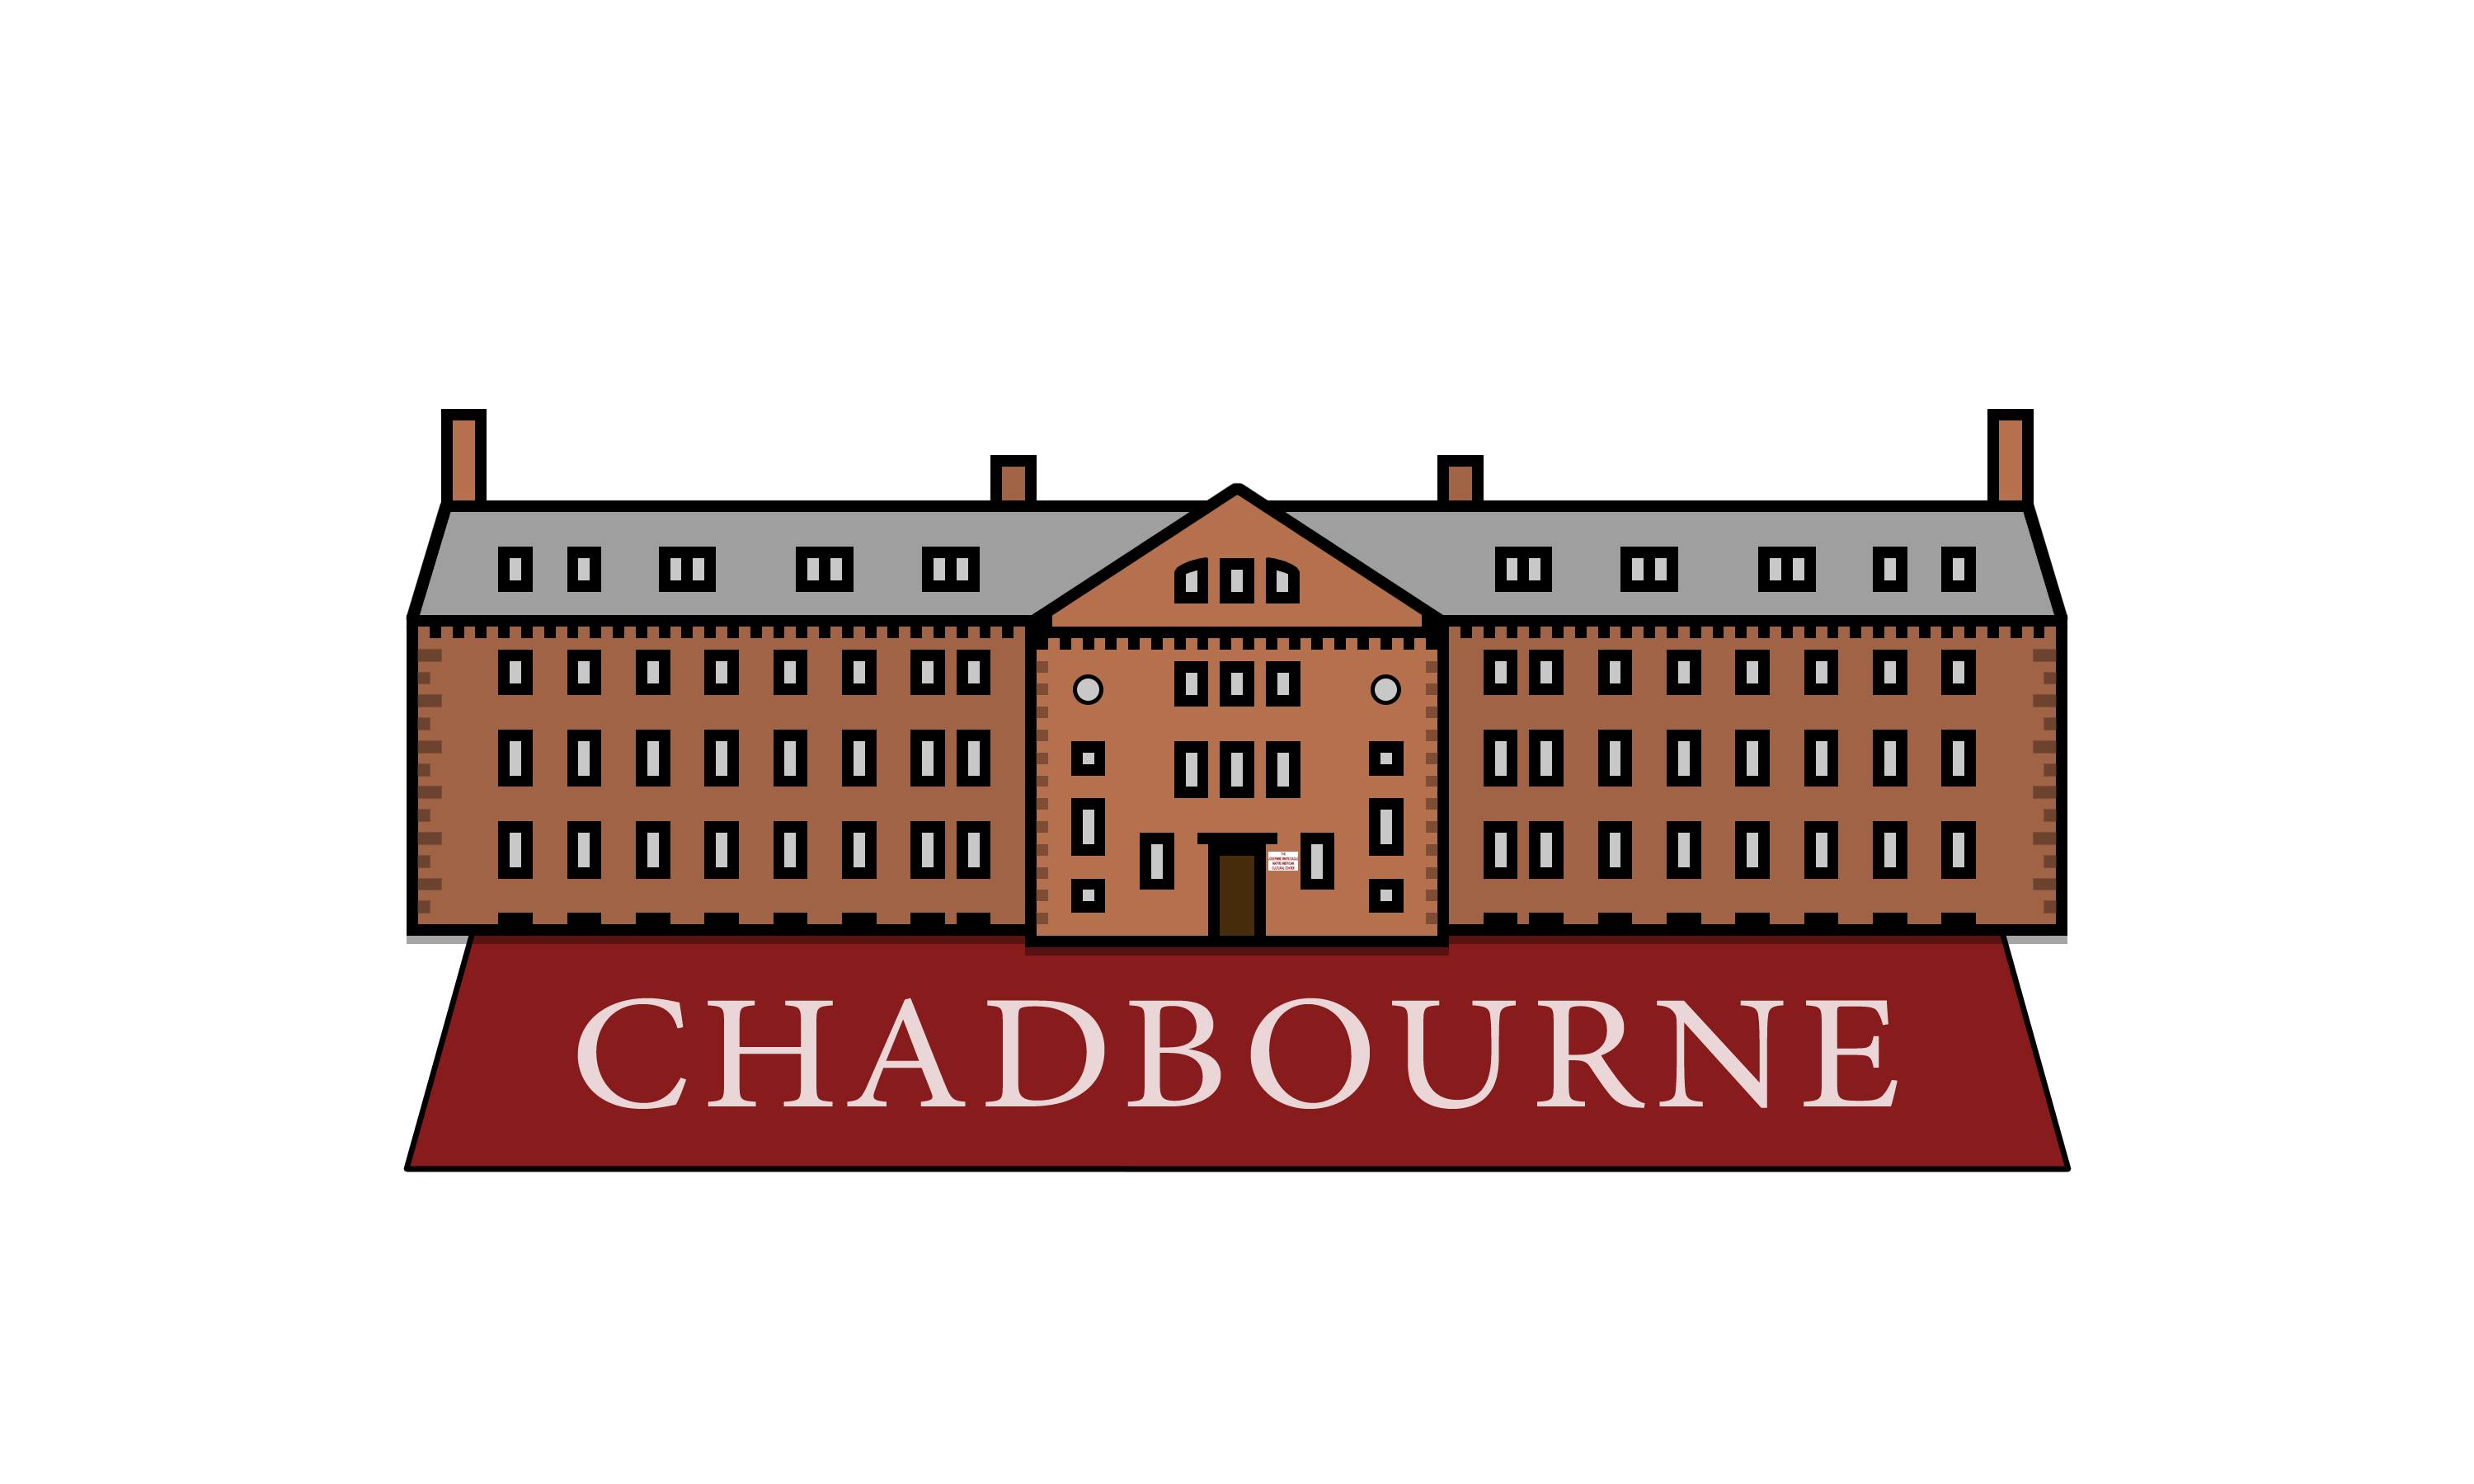 Chadbourne House